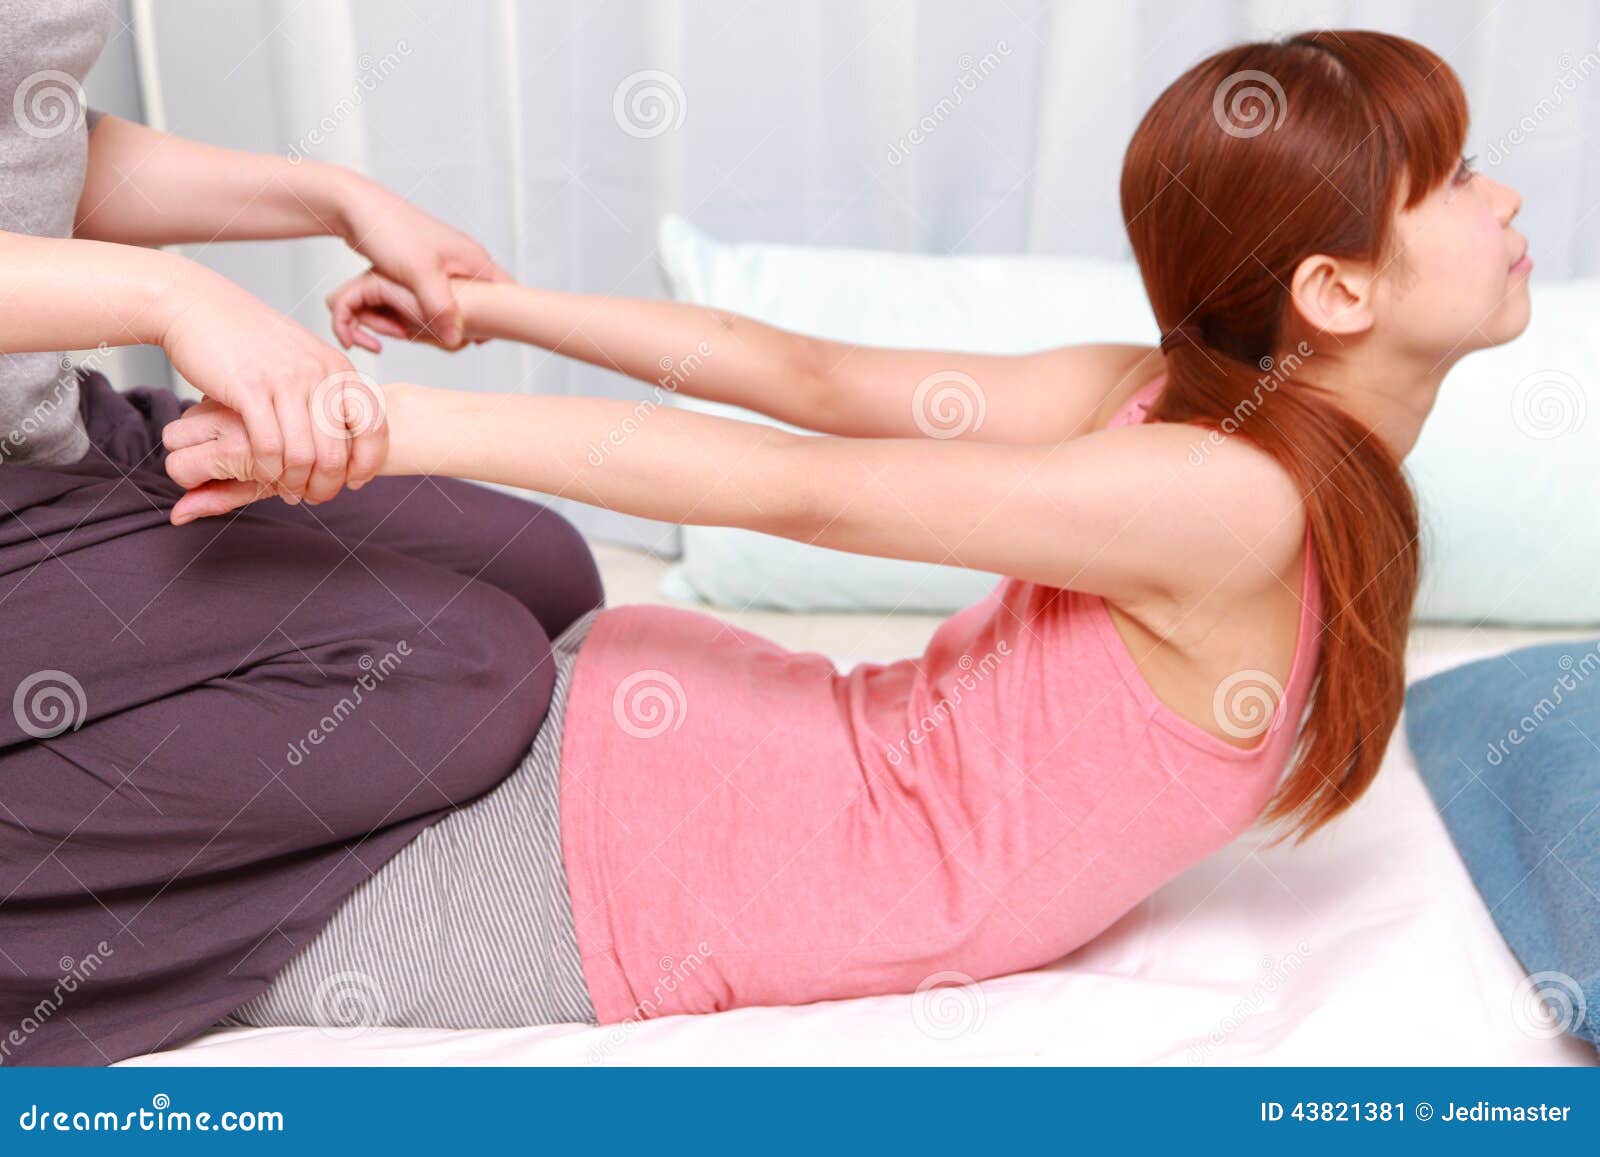 Japanese Woman Getting Thai Massage Stock Image - Image of professional,  female: 43821381